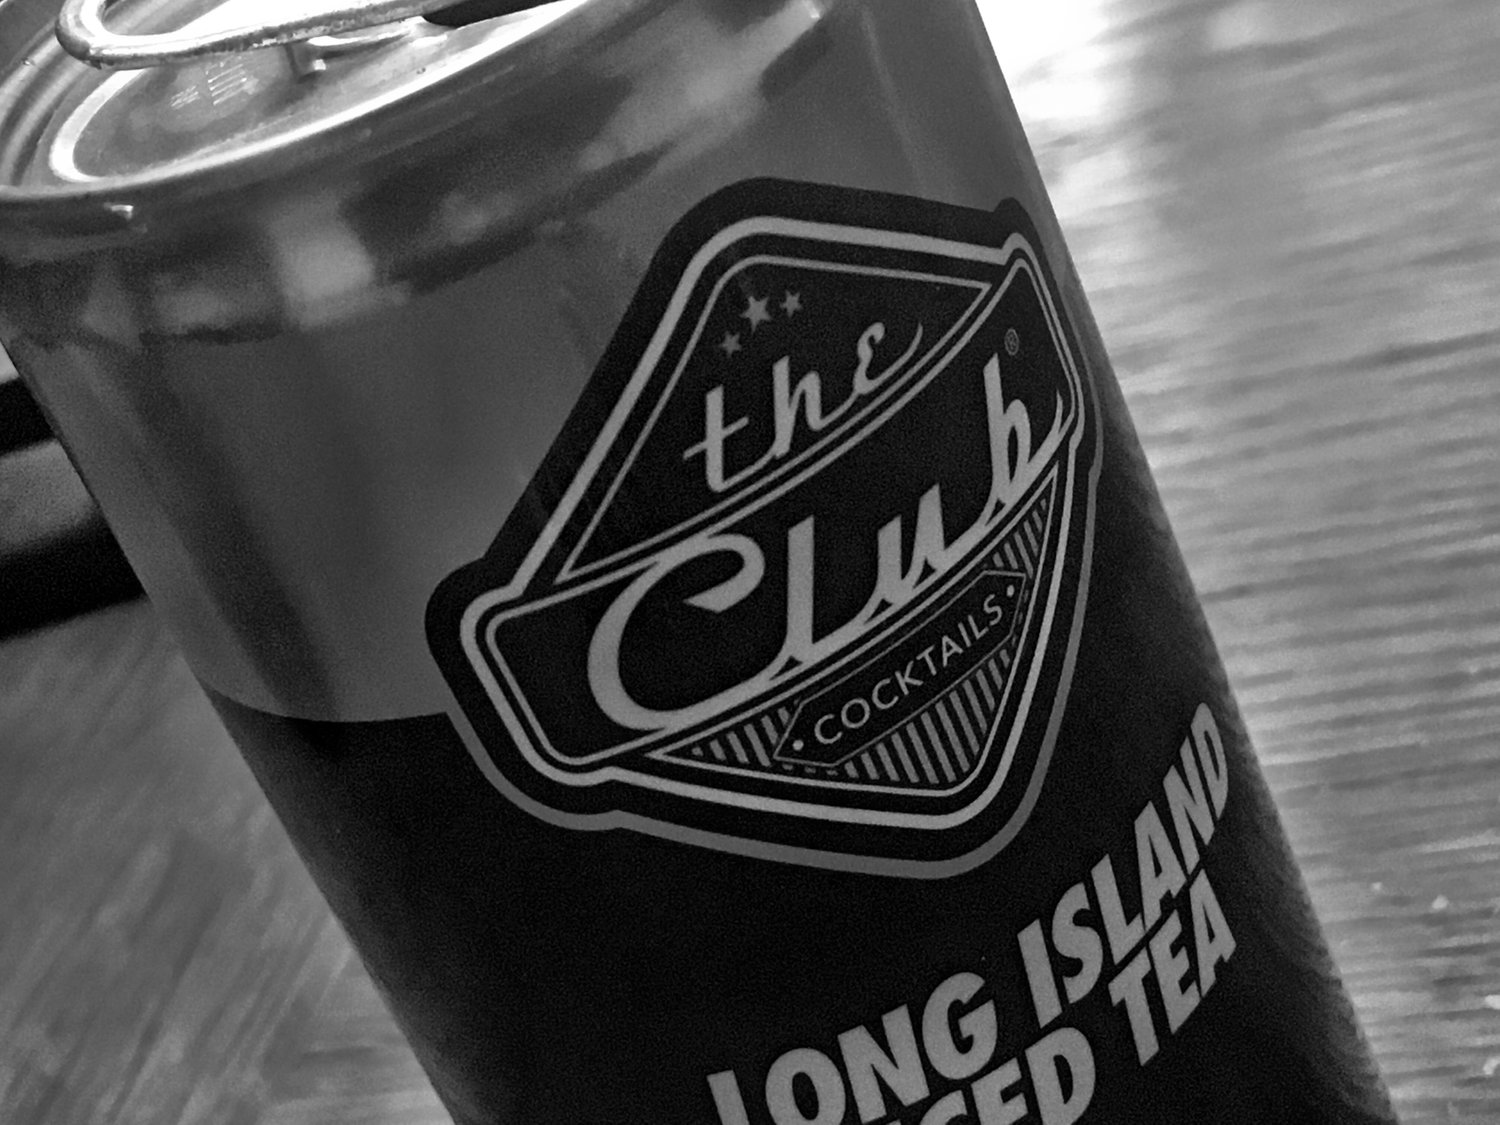 Contraband Long Island Iced Tea, Black Hills Contraband